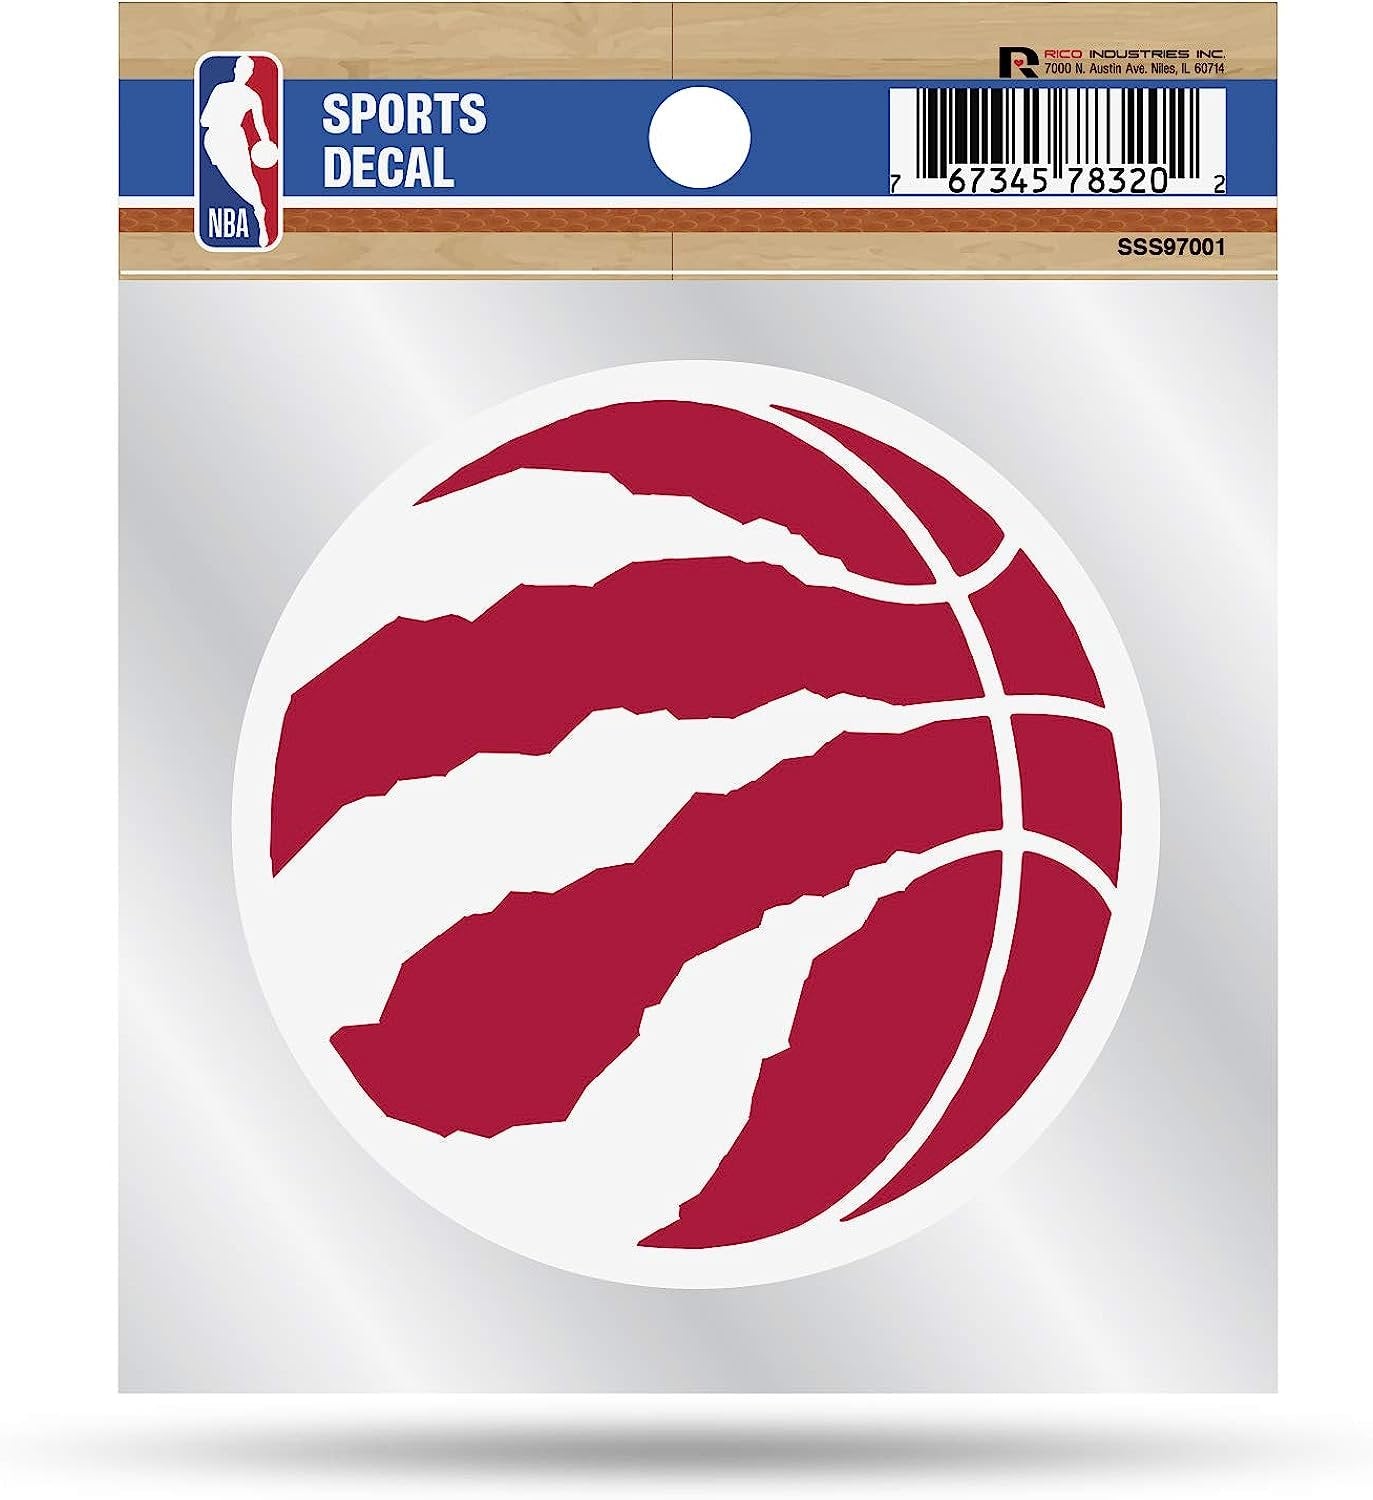 Toronto Raptors 4x4 Die Cut Inch Decal Sticker Flat Vinyl, Primary Logo, Clear Backing